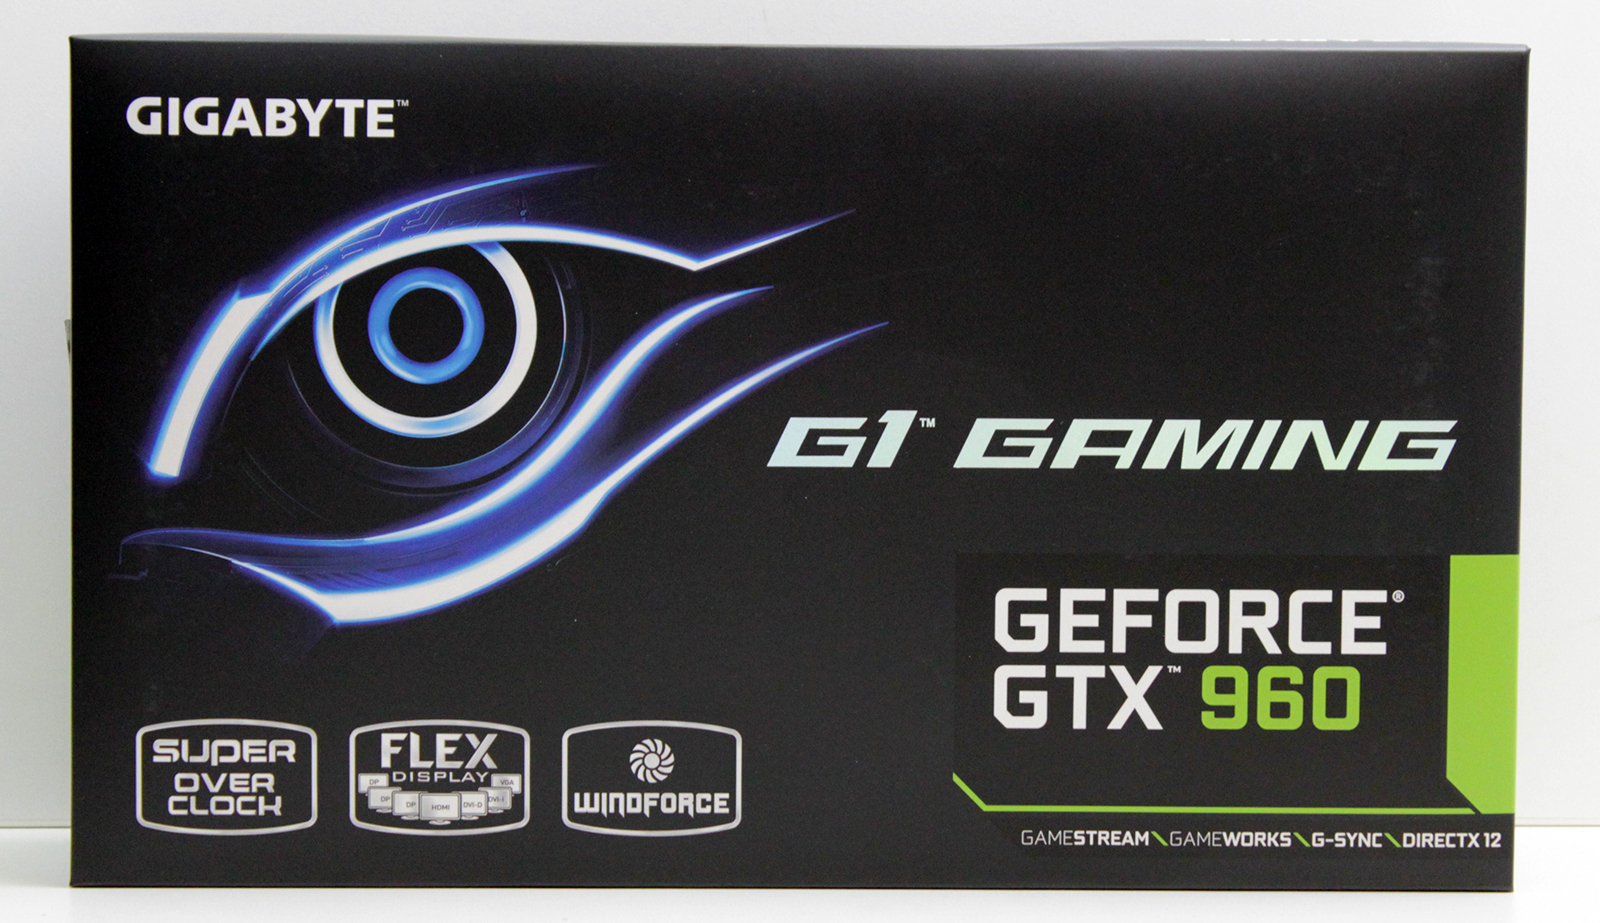 1 Gigabyte GTX 960 G1 Gaming box